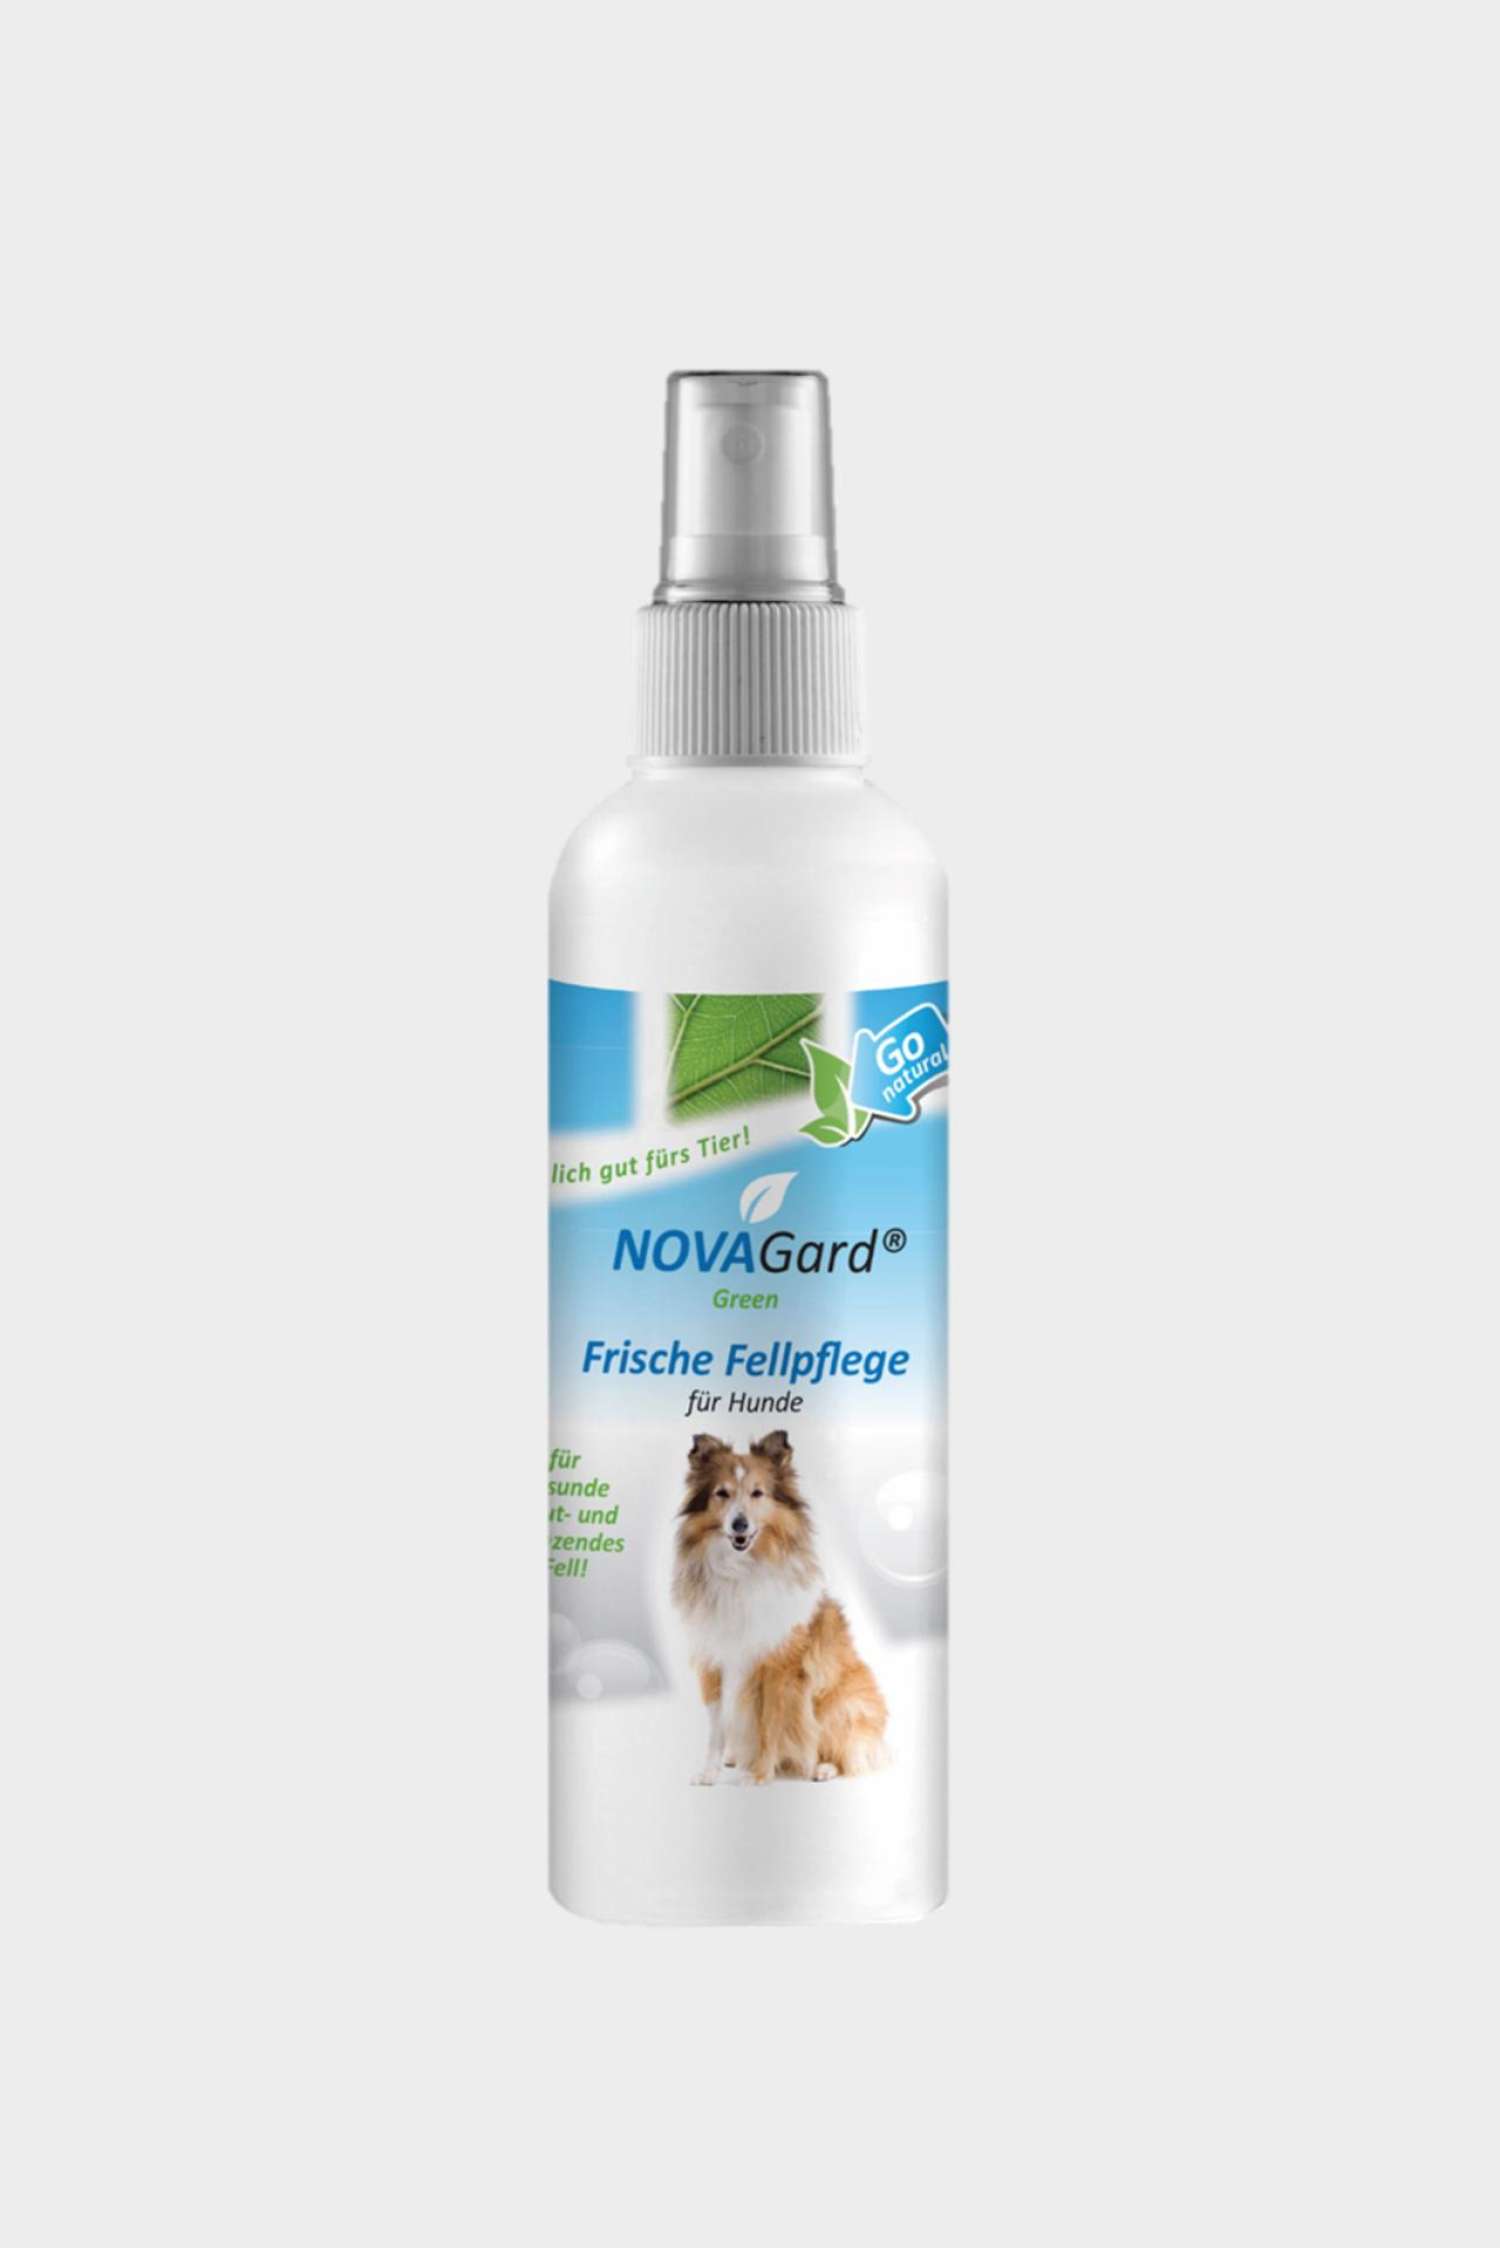 NovaGard Green Fresh coat care for dogs